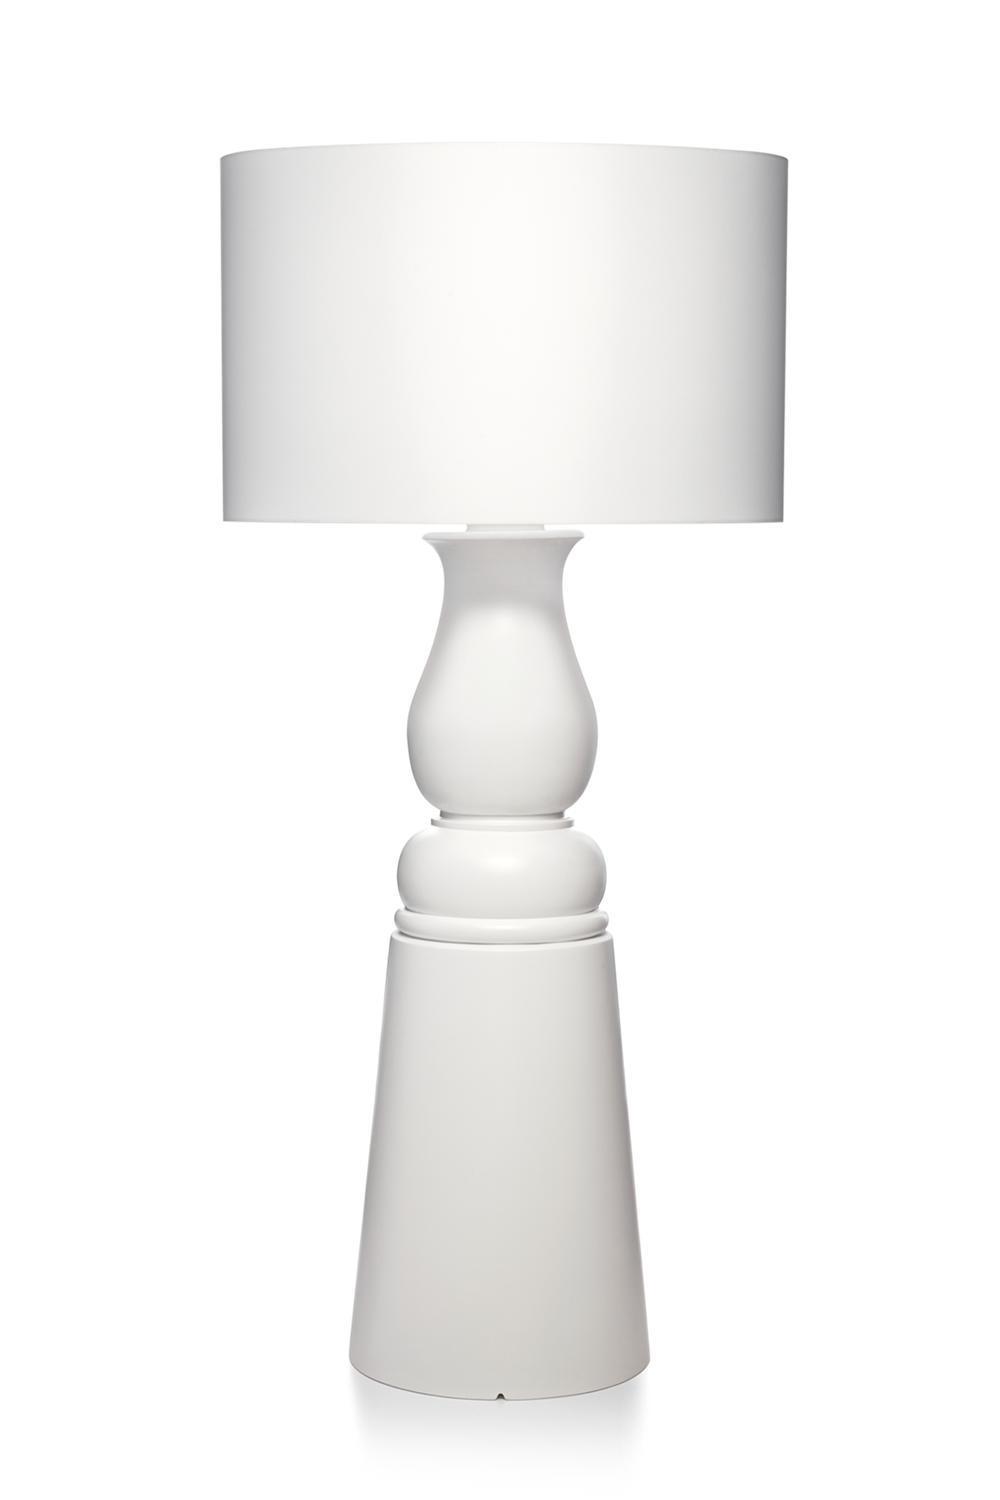 Postmodern Classic Simple Brief White Vase Hotel Lobby Table Light